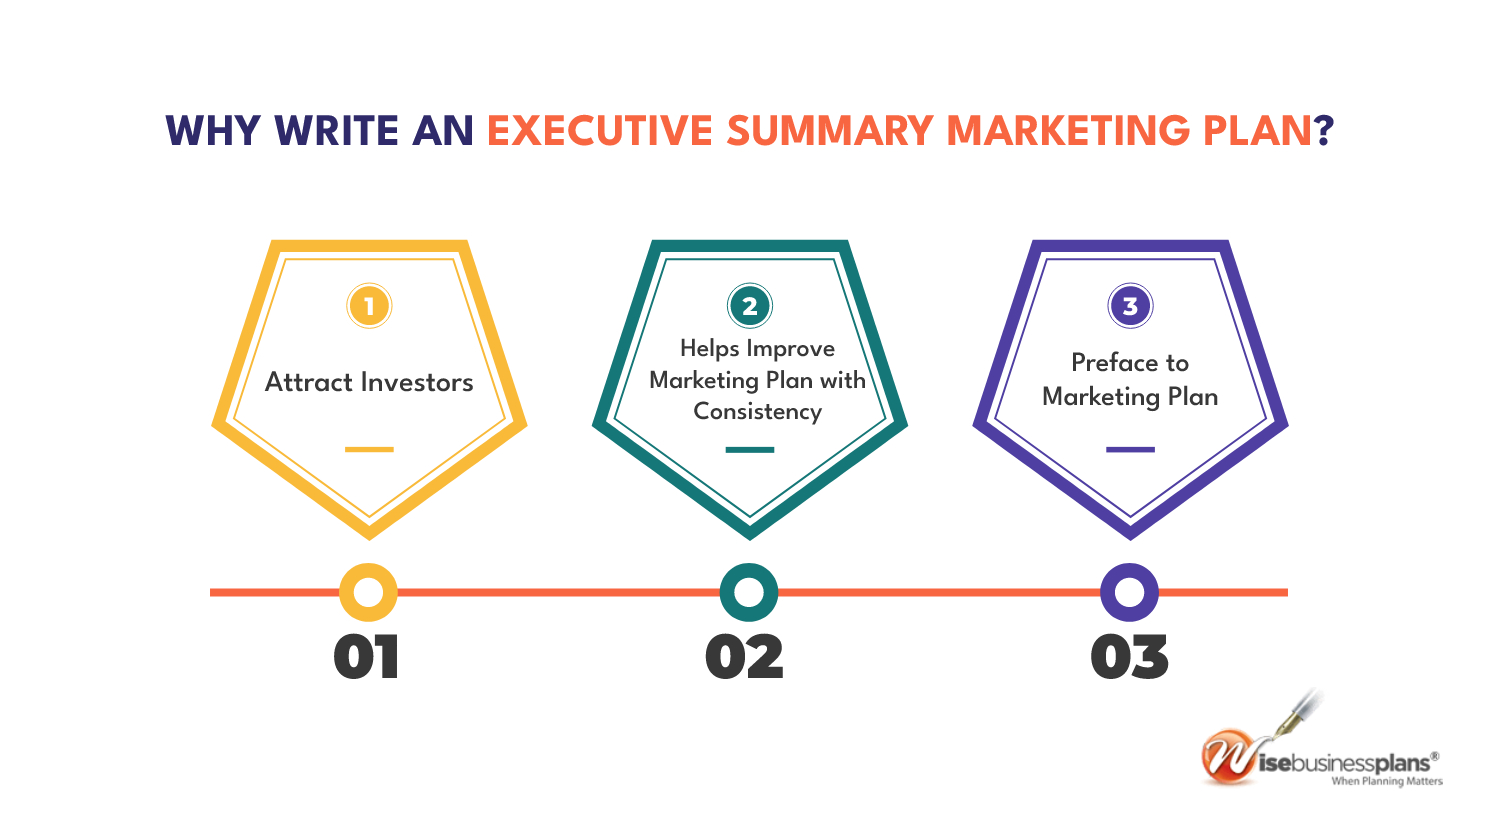 Why write an executive summary marketing plan